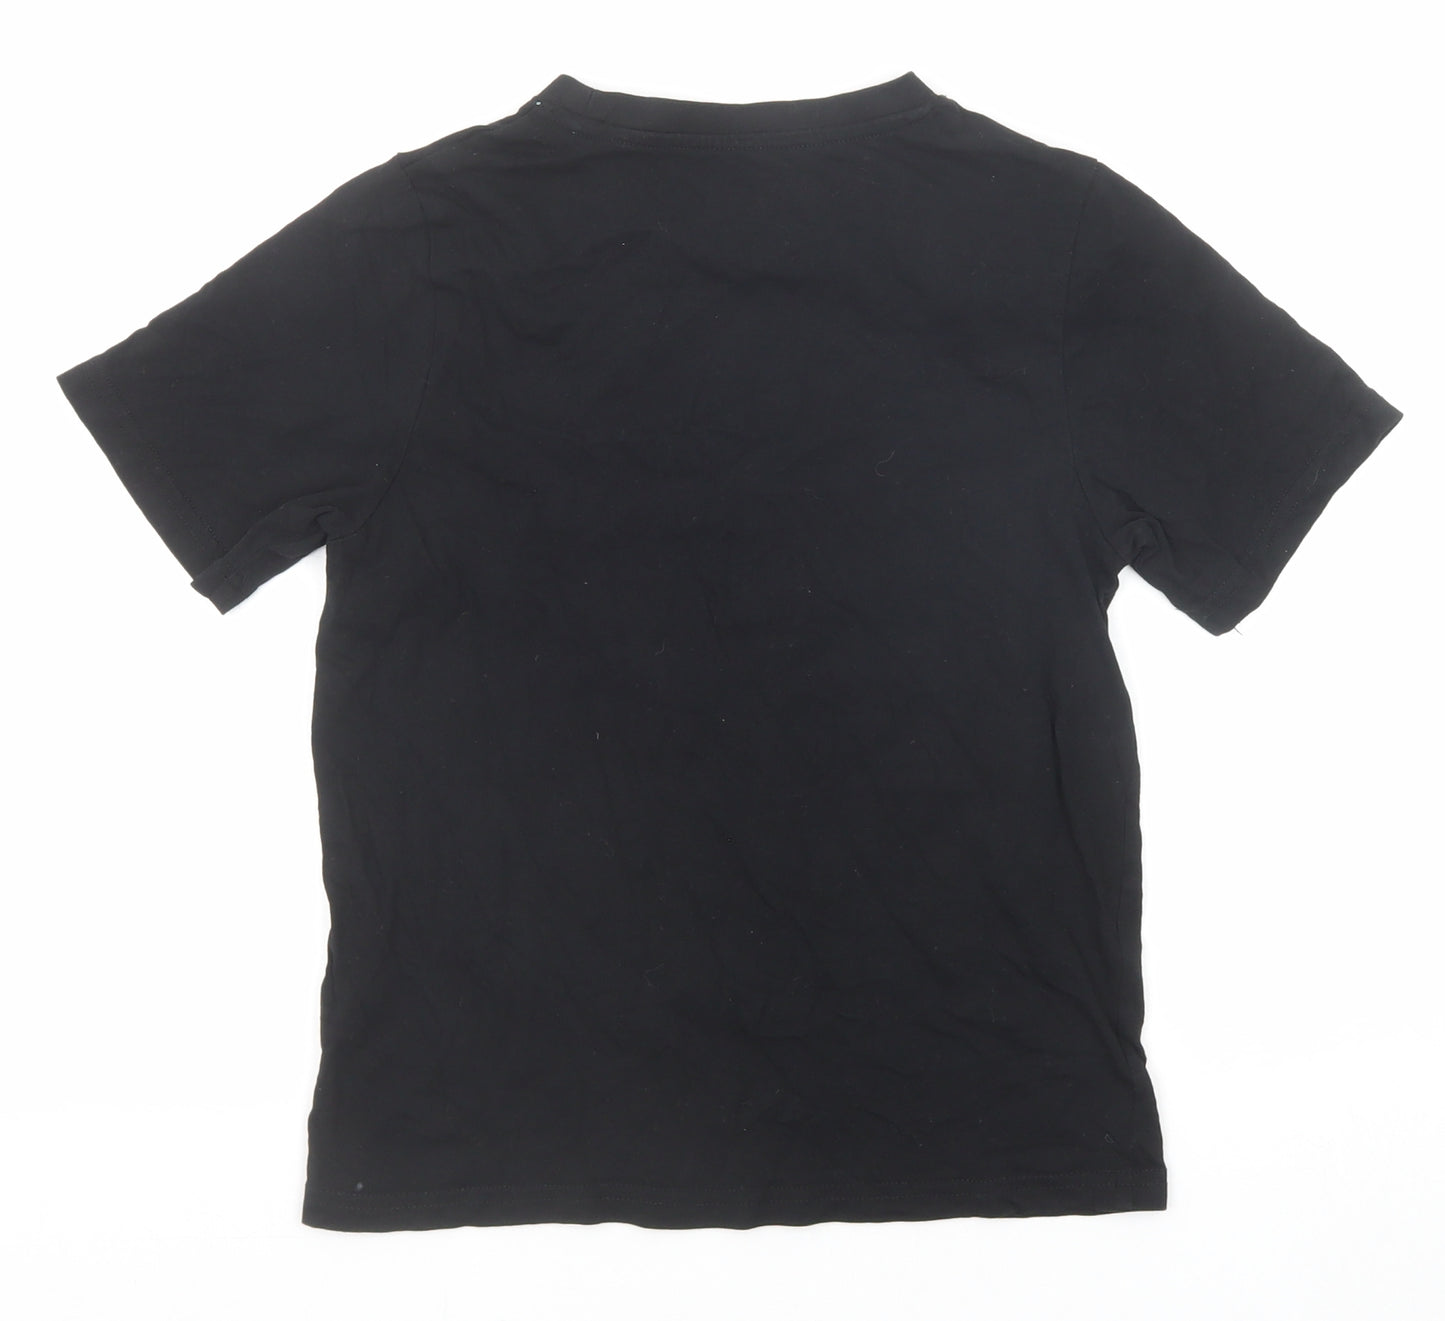 Fortnite Boys Black Cotton Basic T-Shirt Size 10-11 Years Crew Neck Pullover